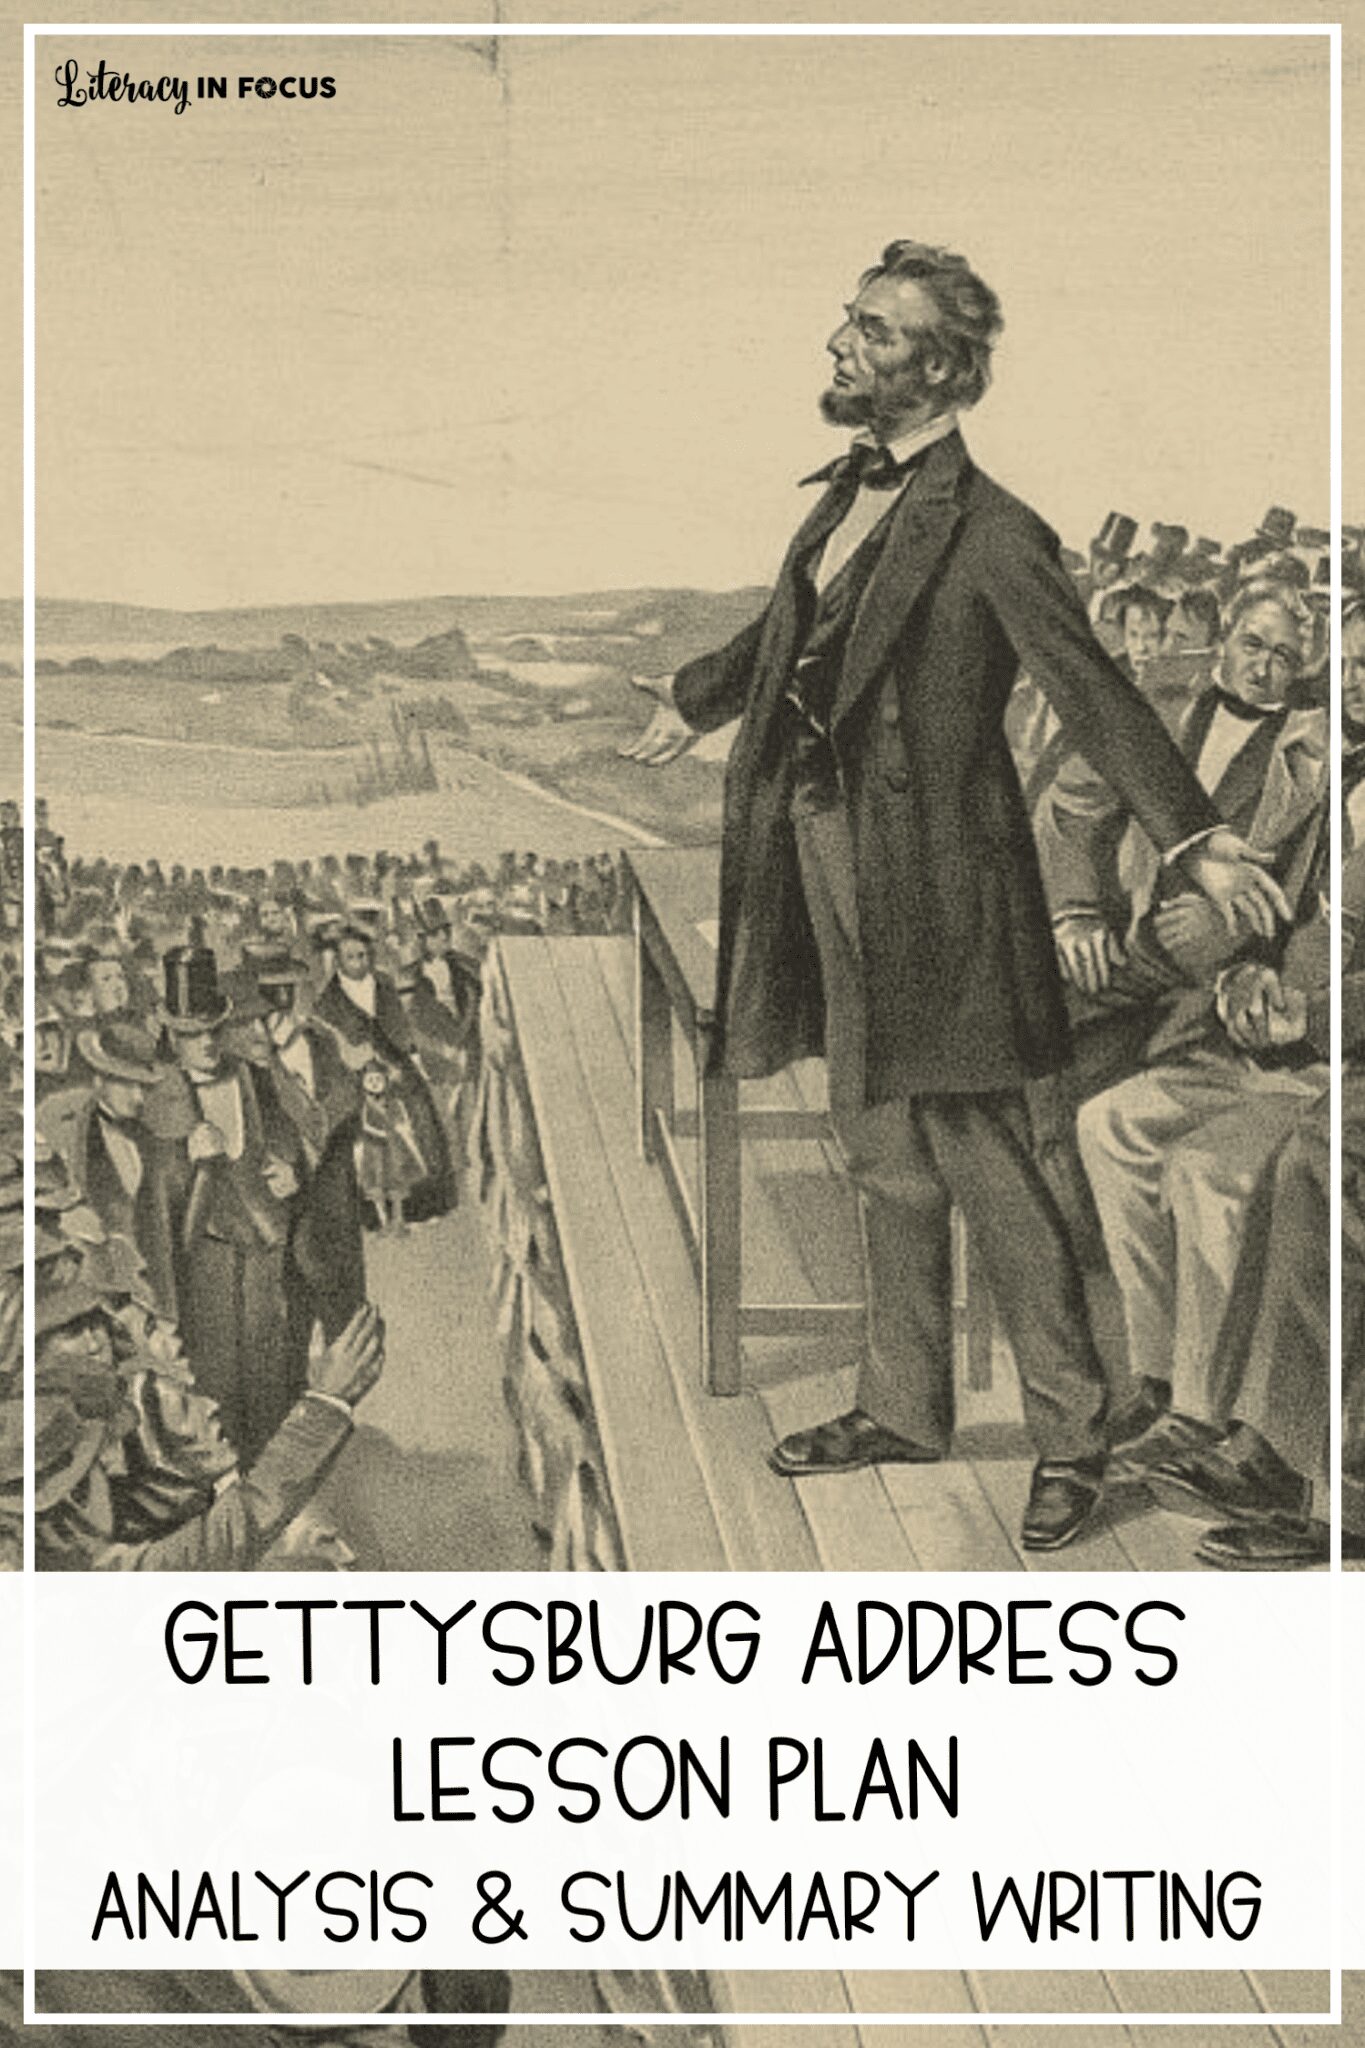 The Gettysburg Address Summary Writing Lesson